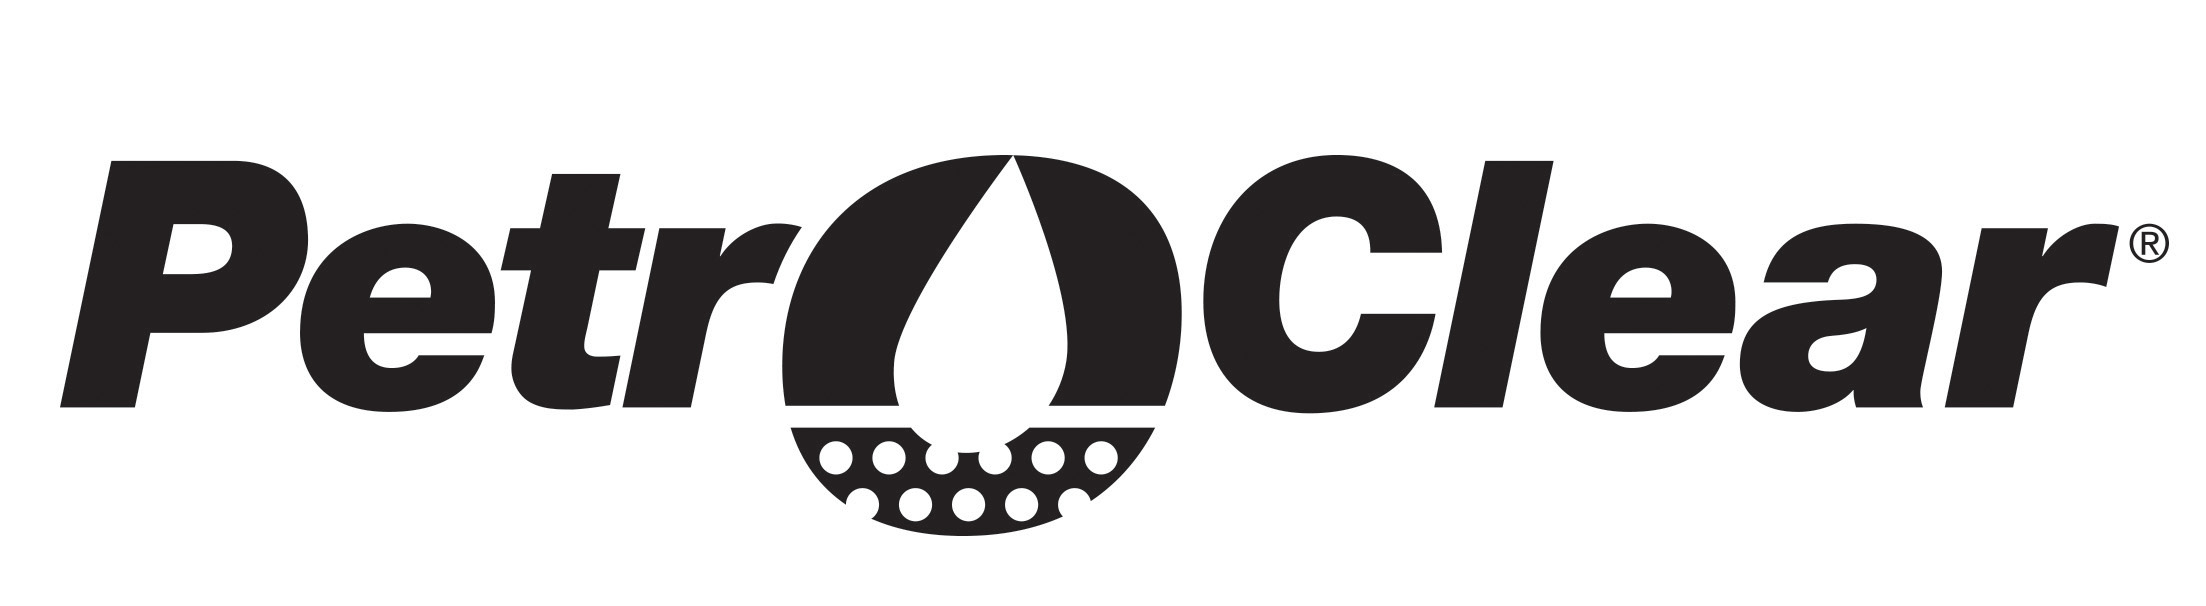 PetroClear Black Logo on White